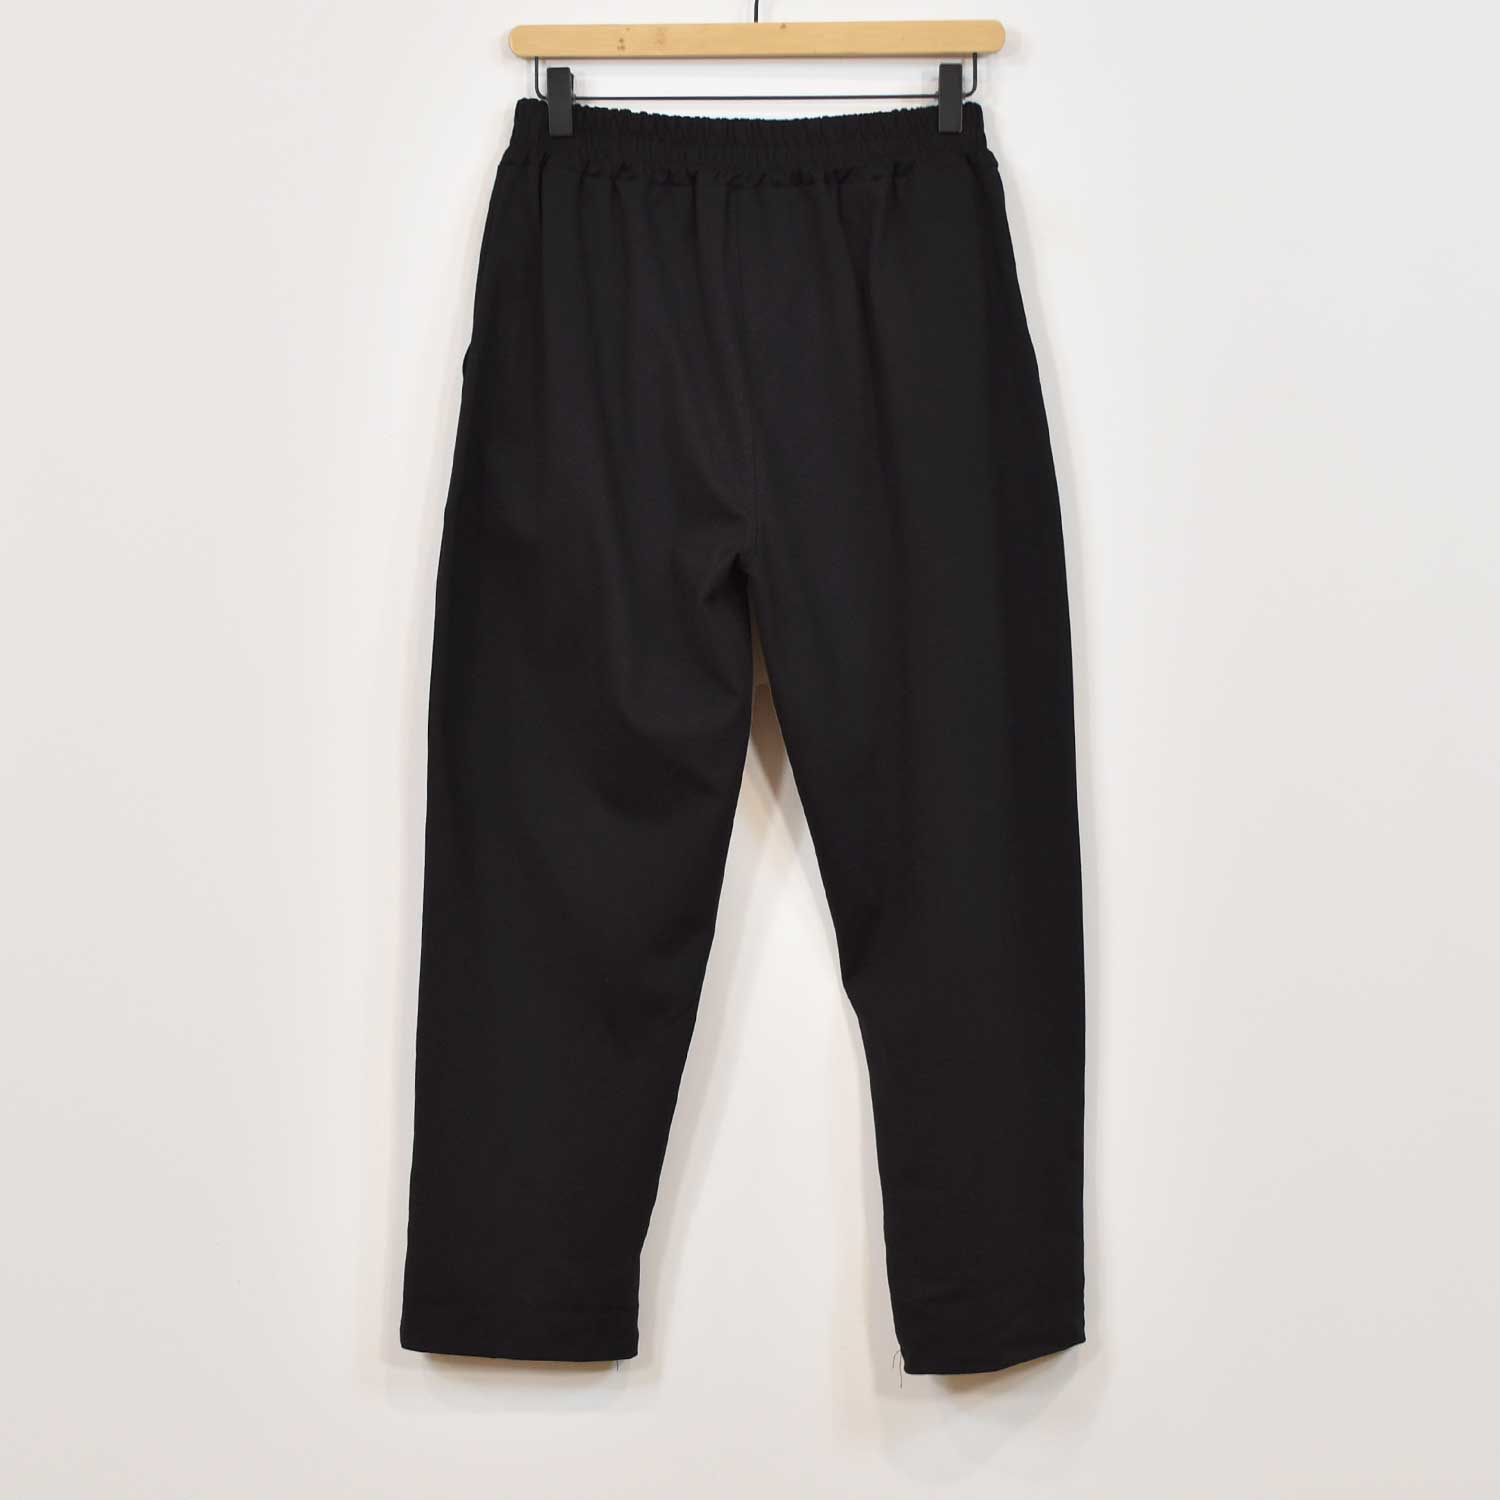 Black elastic baggy trousers 